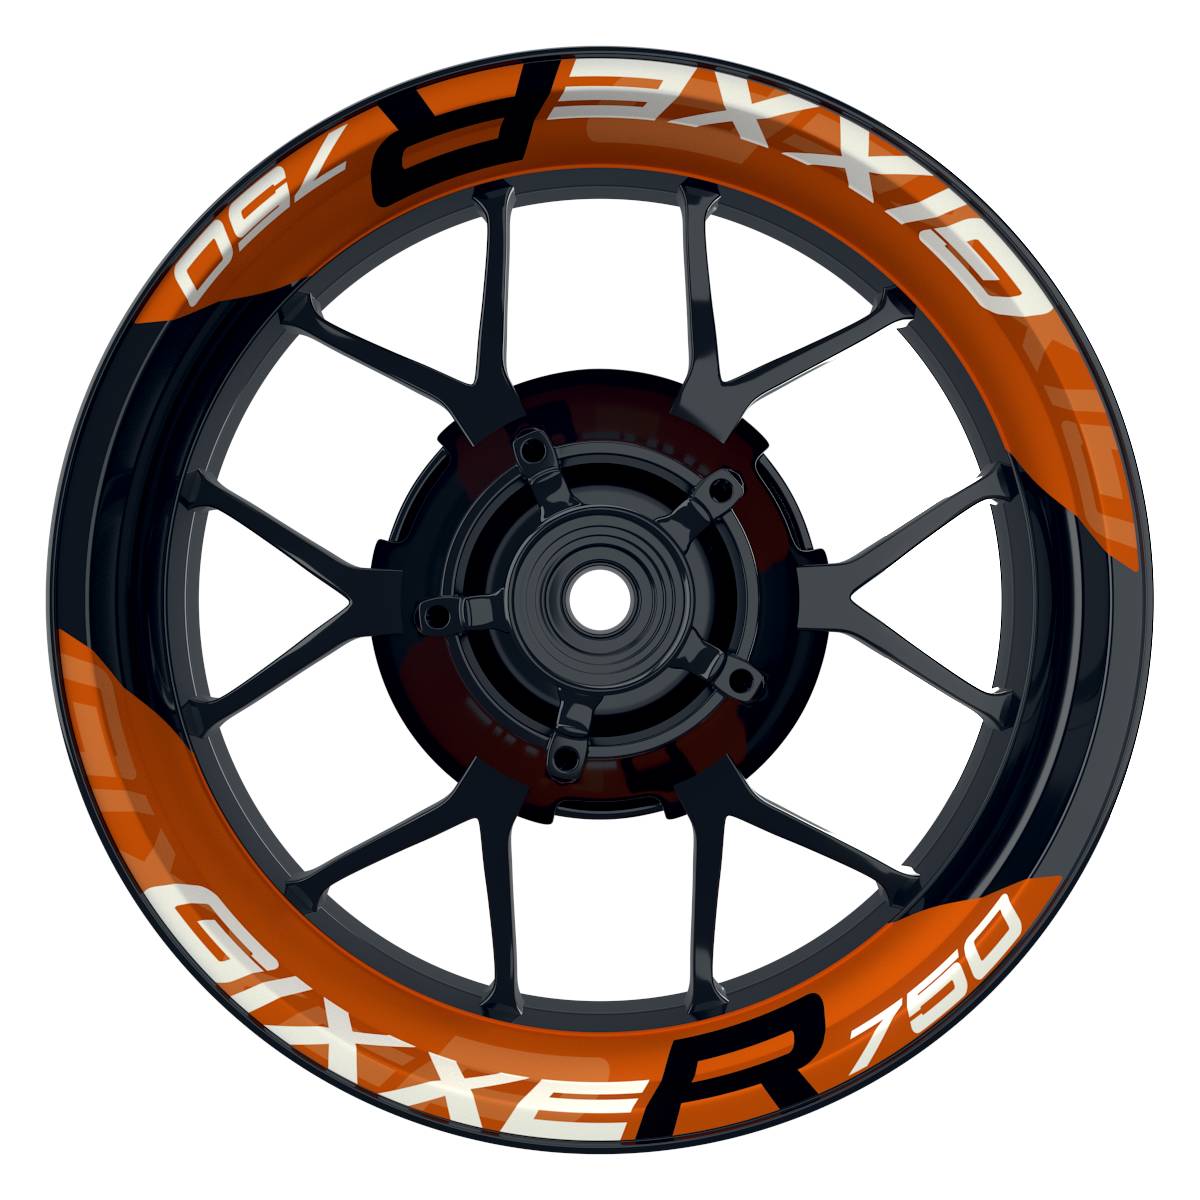 Wheelsticker Felgenaufkleber GIXXER750 einfarbig V2 orange Frontansicht